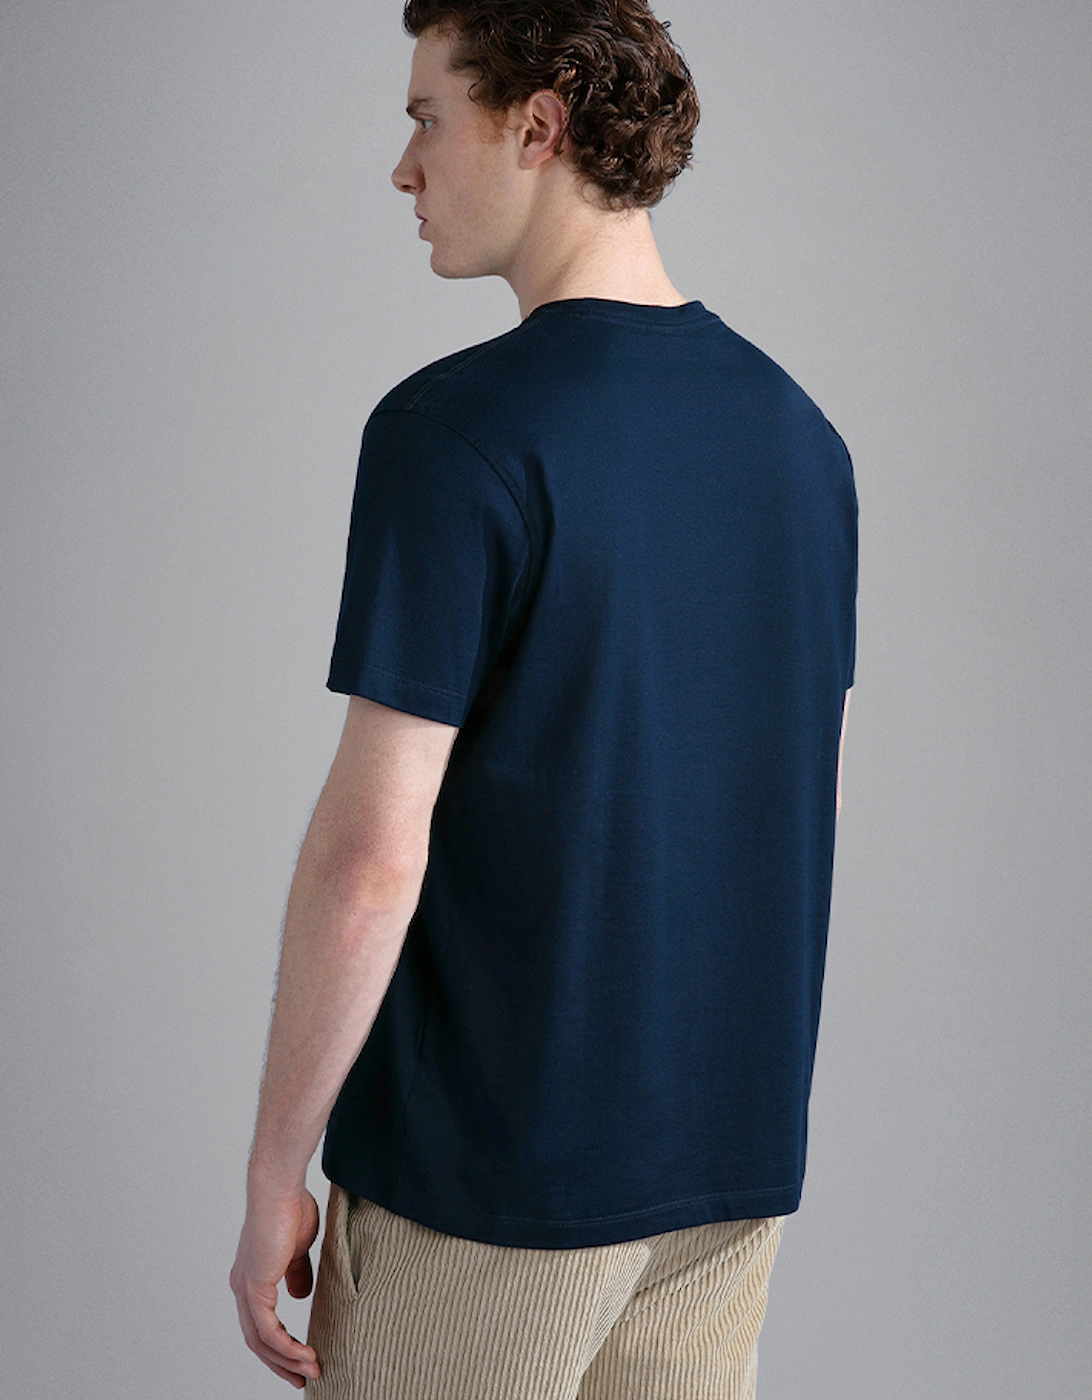 Cotton T-Shirt with Reflex Print